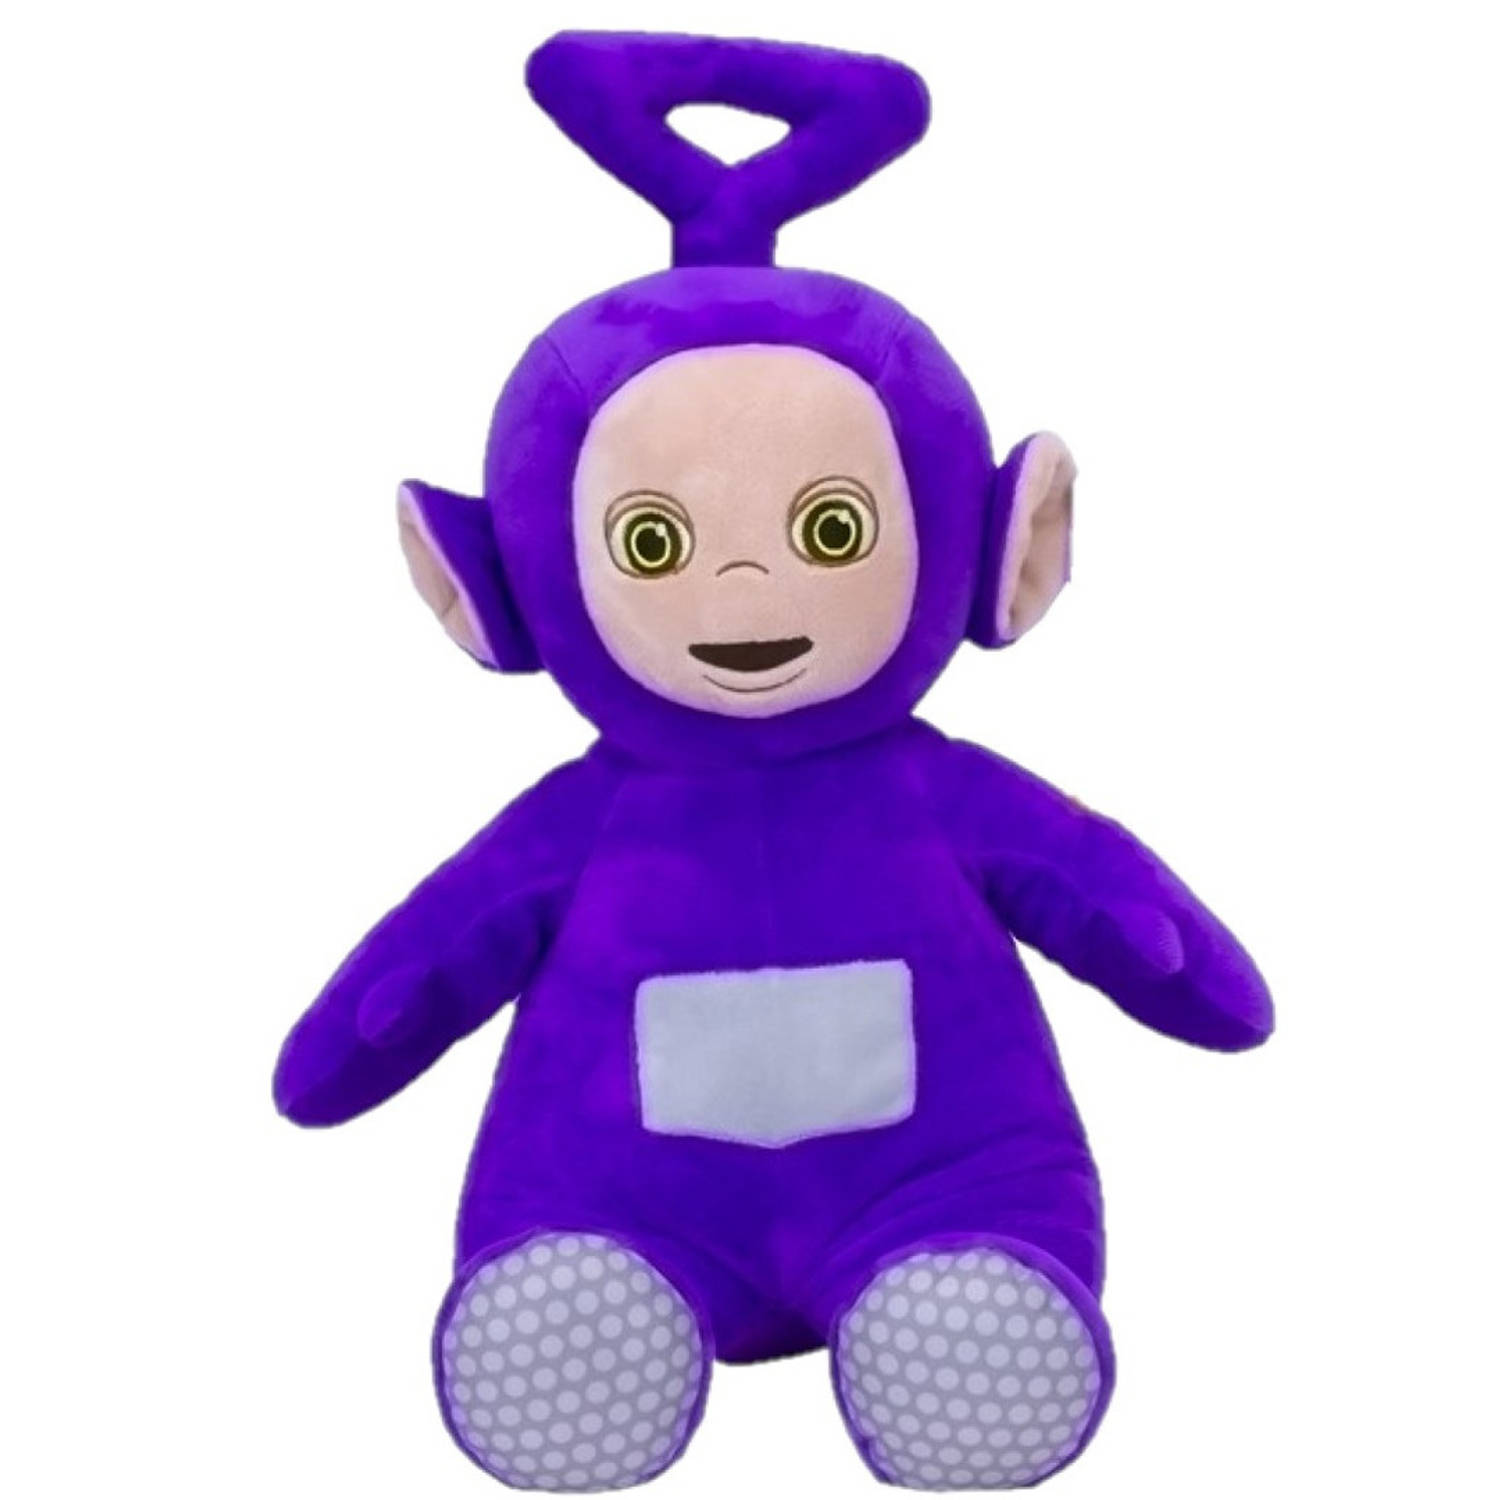 Pluche Teletubbies speelgoed knuffel Tinky Winky paars 50 cm - Knuffelpop